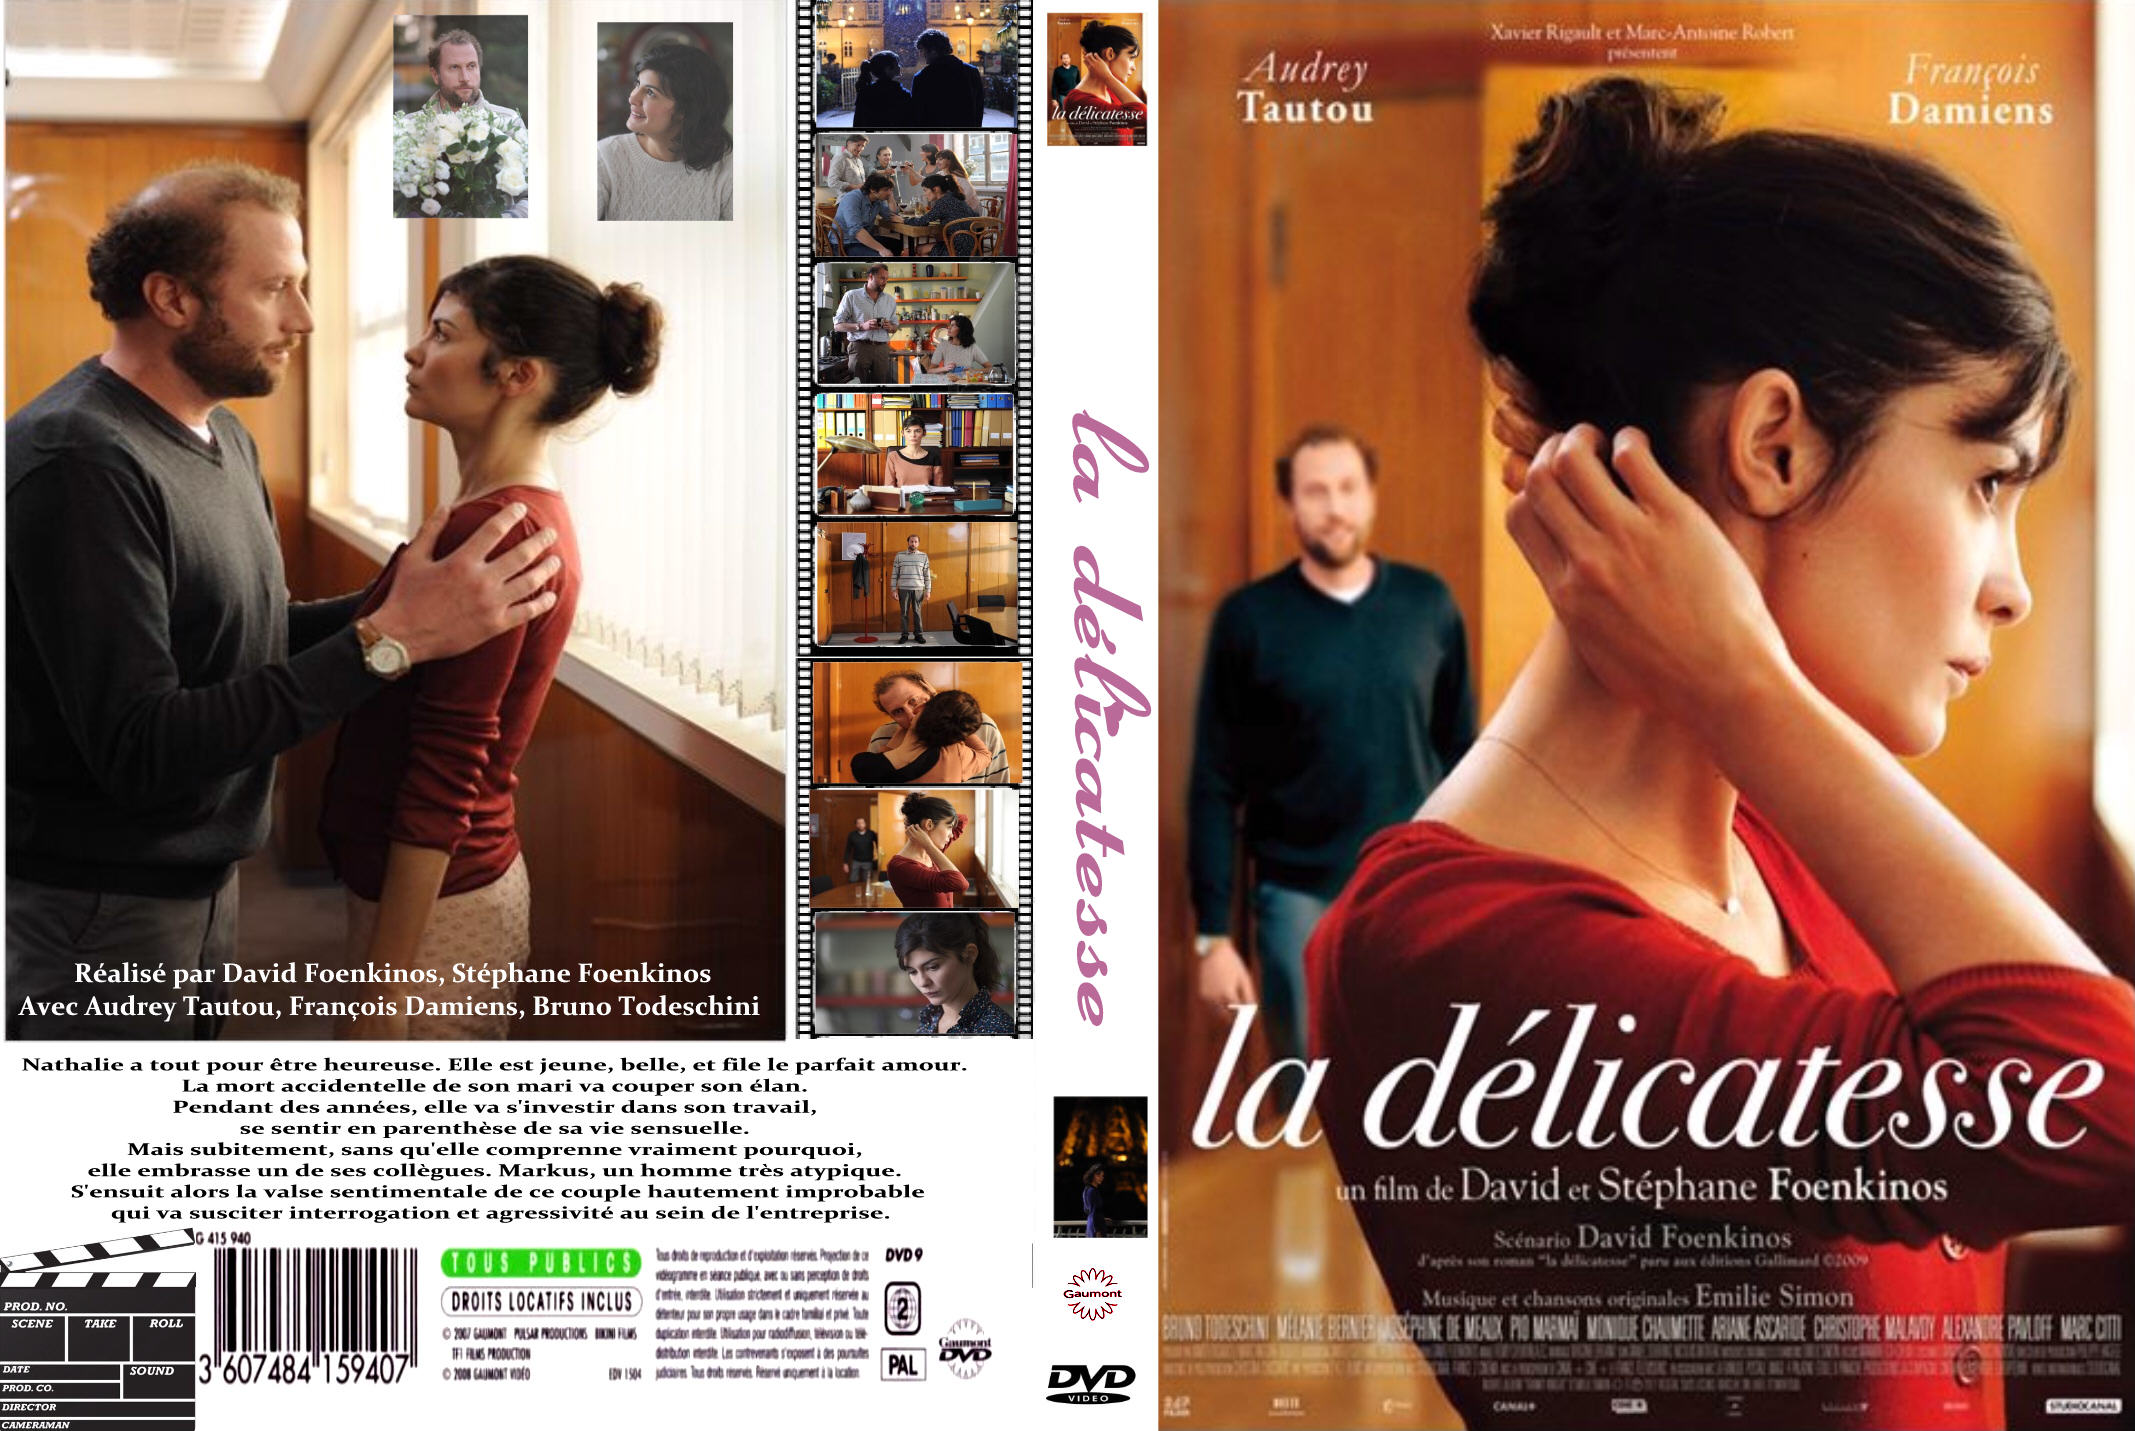 Jaquette DVD La delicatesse custom